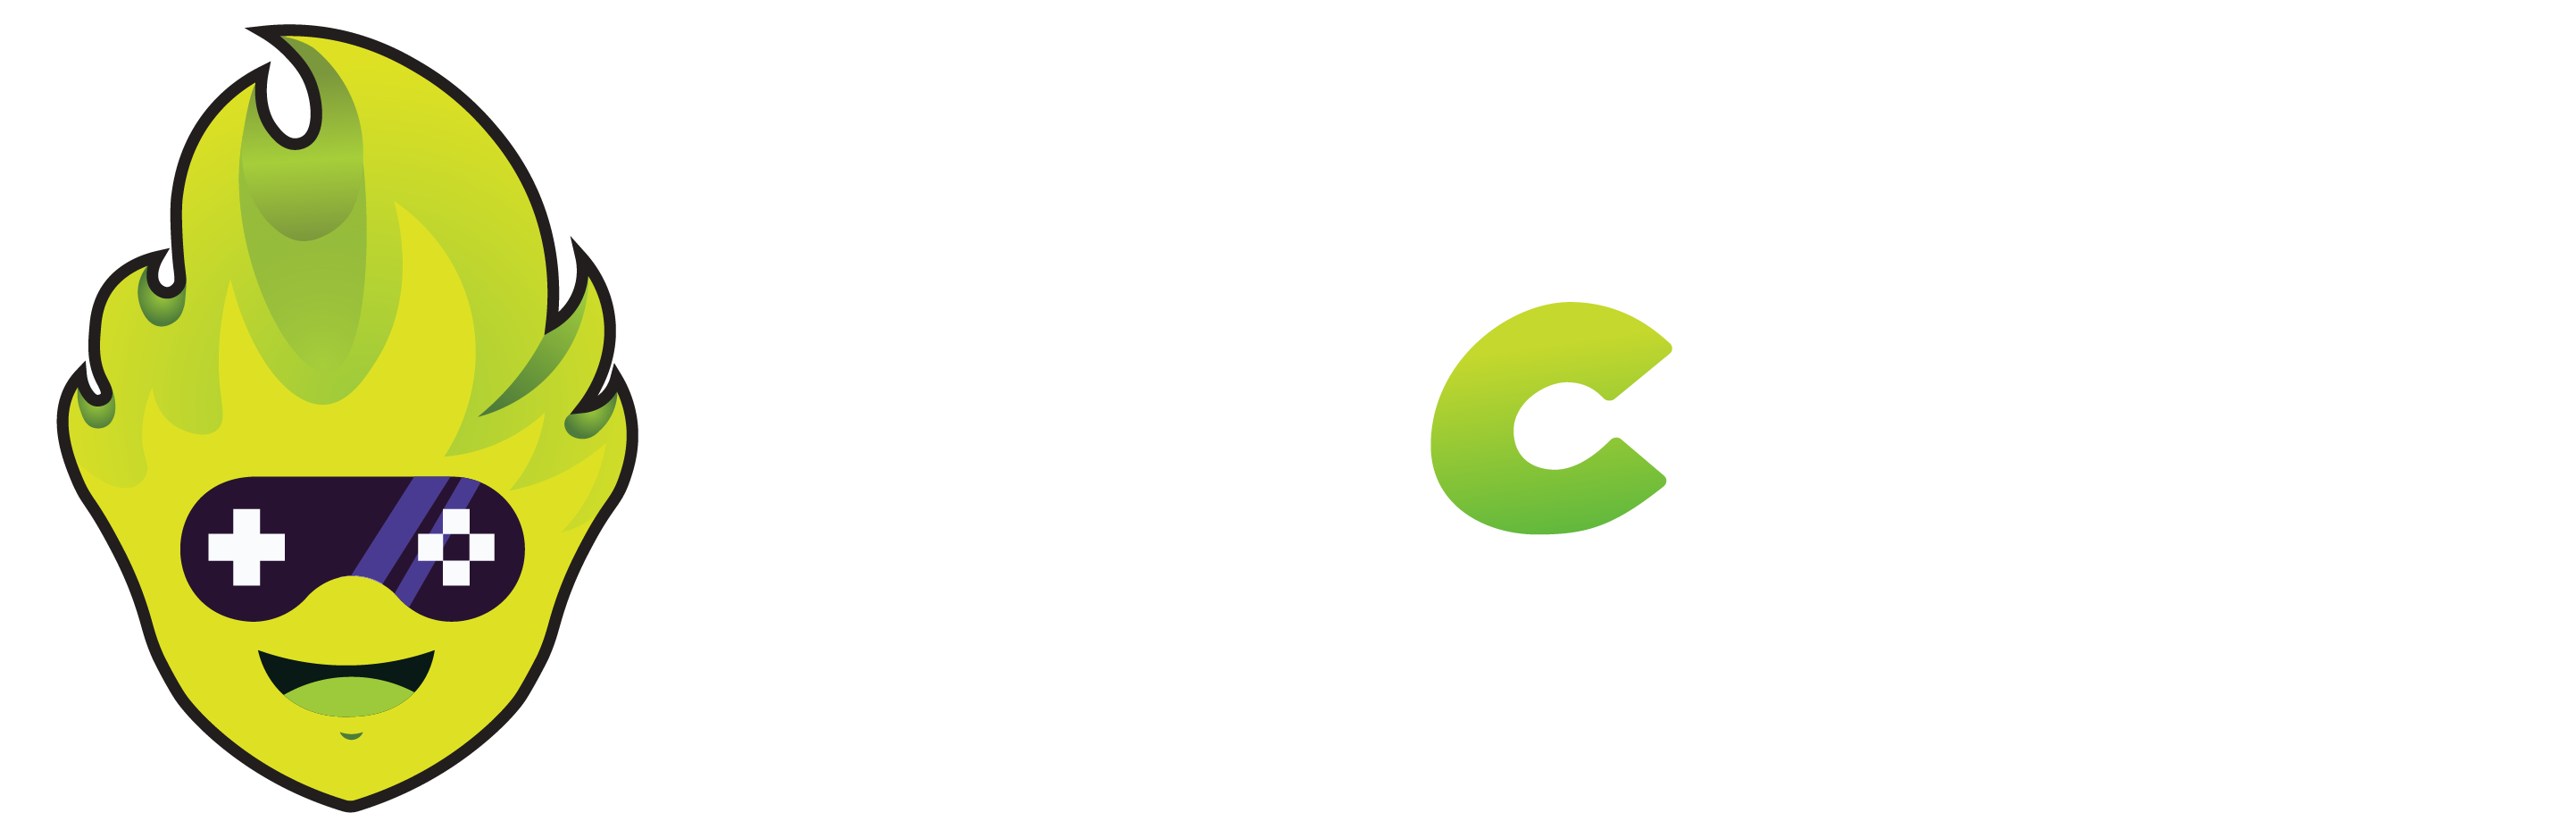 FanClash